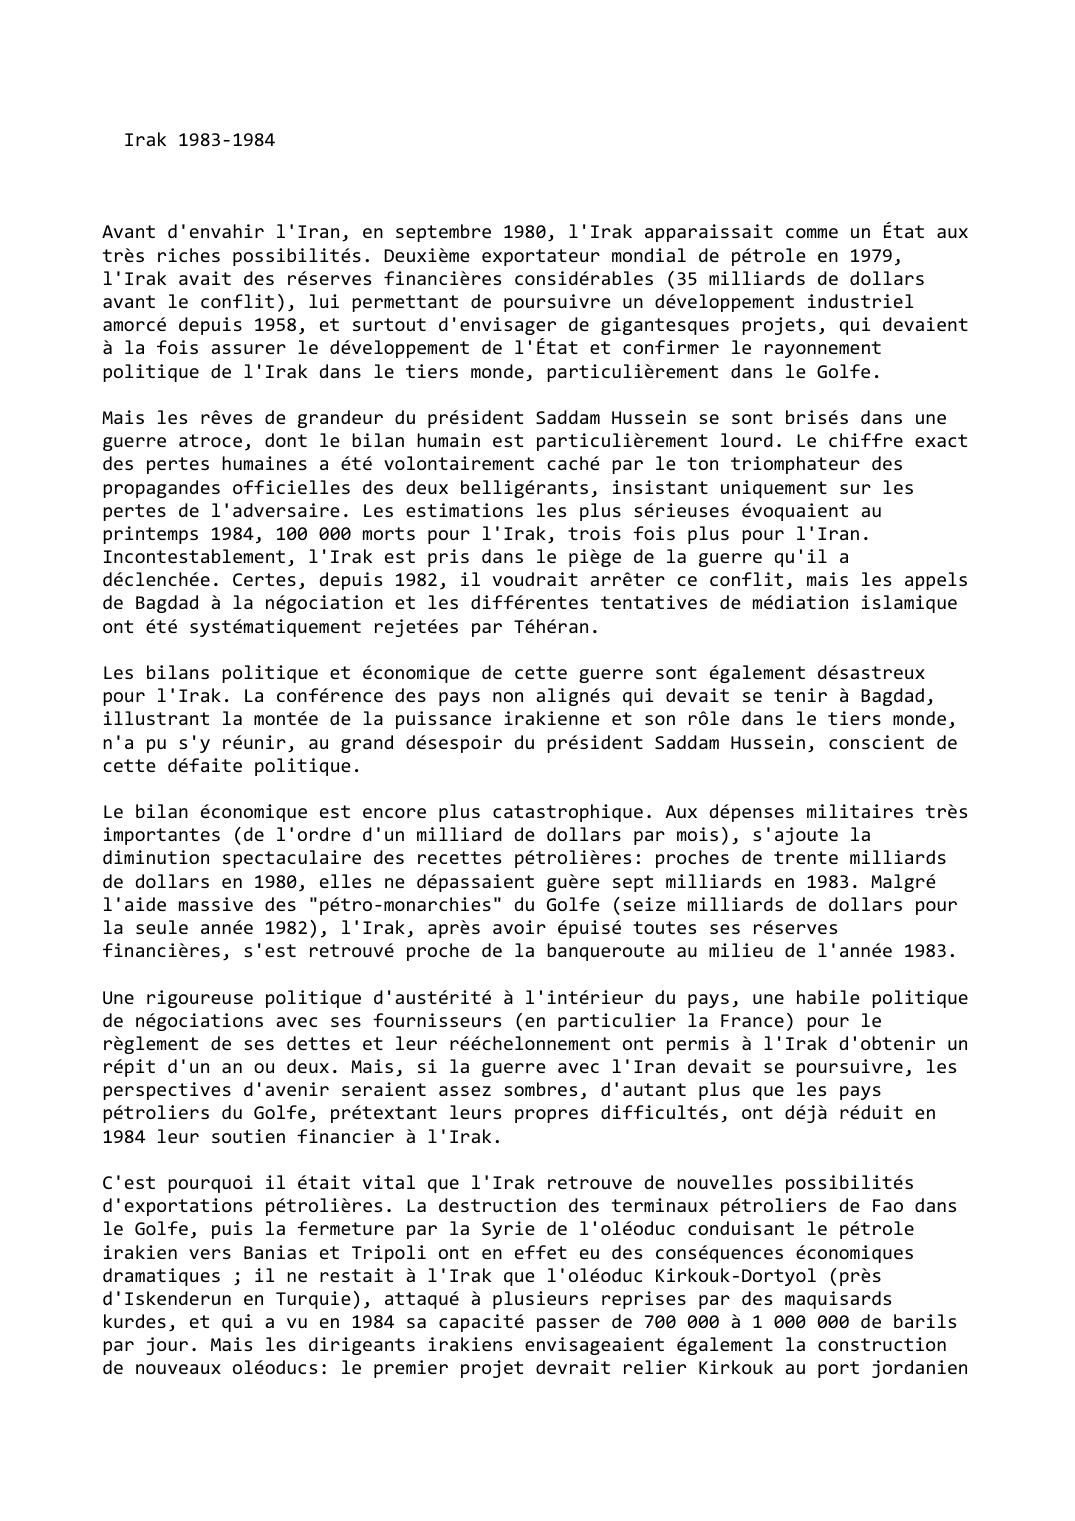 Prévisualisation du document Irak (1983-1984)